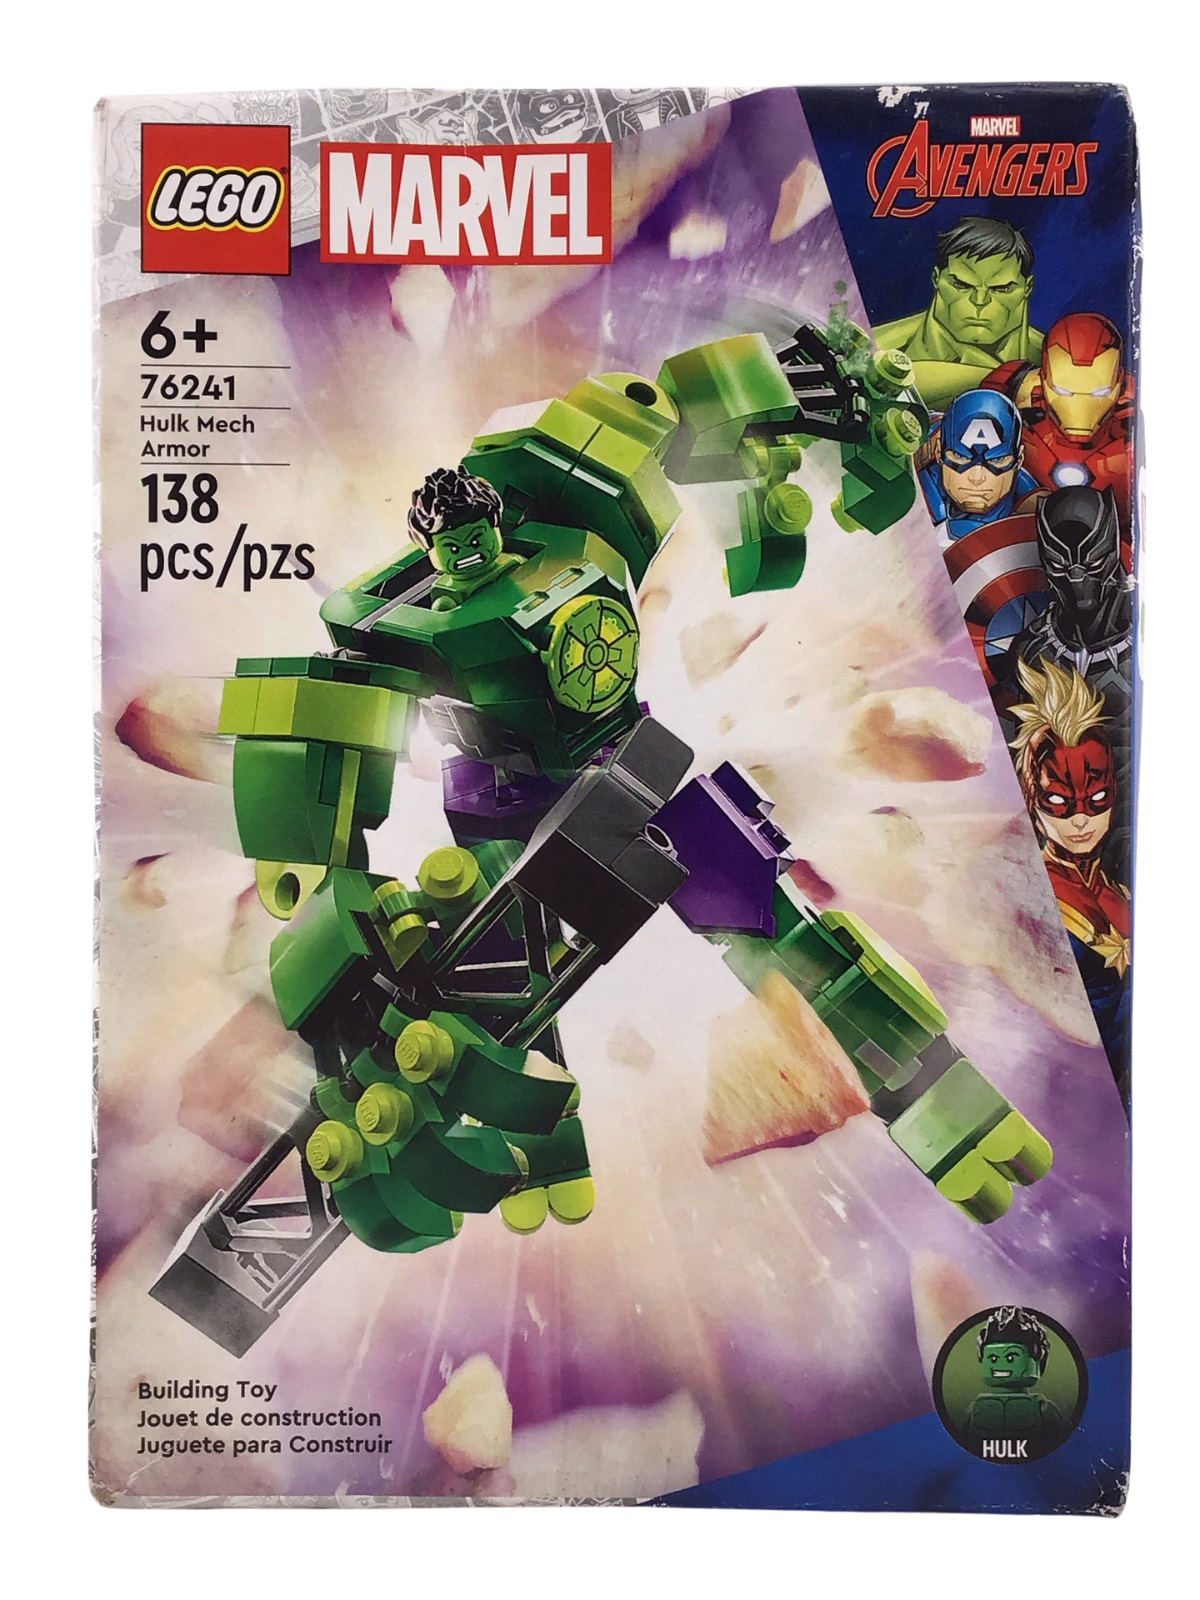 LEGO Marvel Avengers 76241 HULK MECH ARMOR Building Set FAST FREE SHIPPING